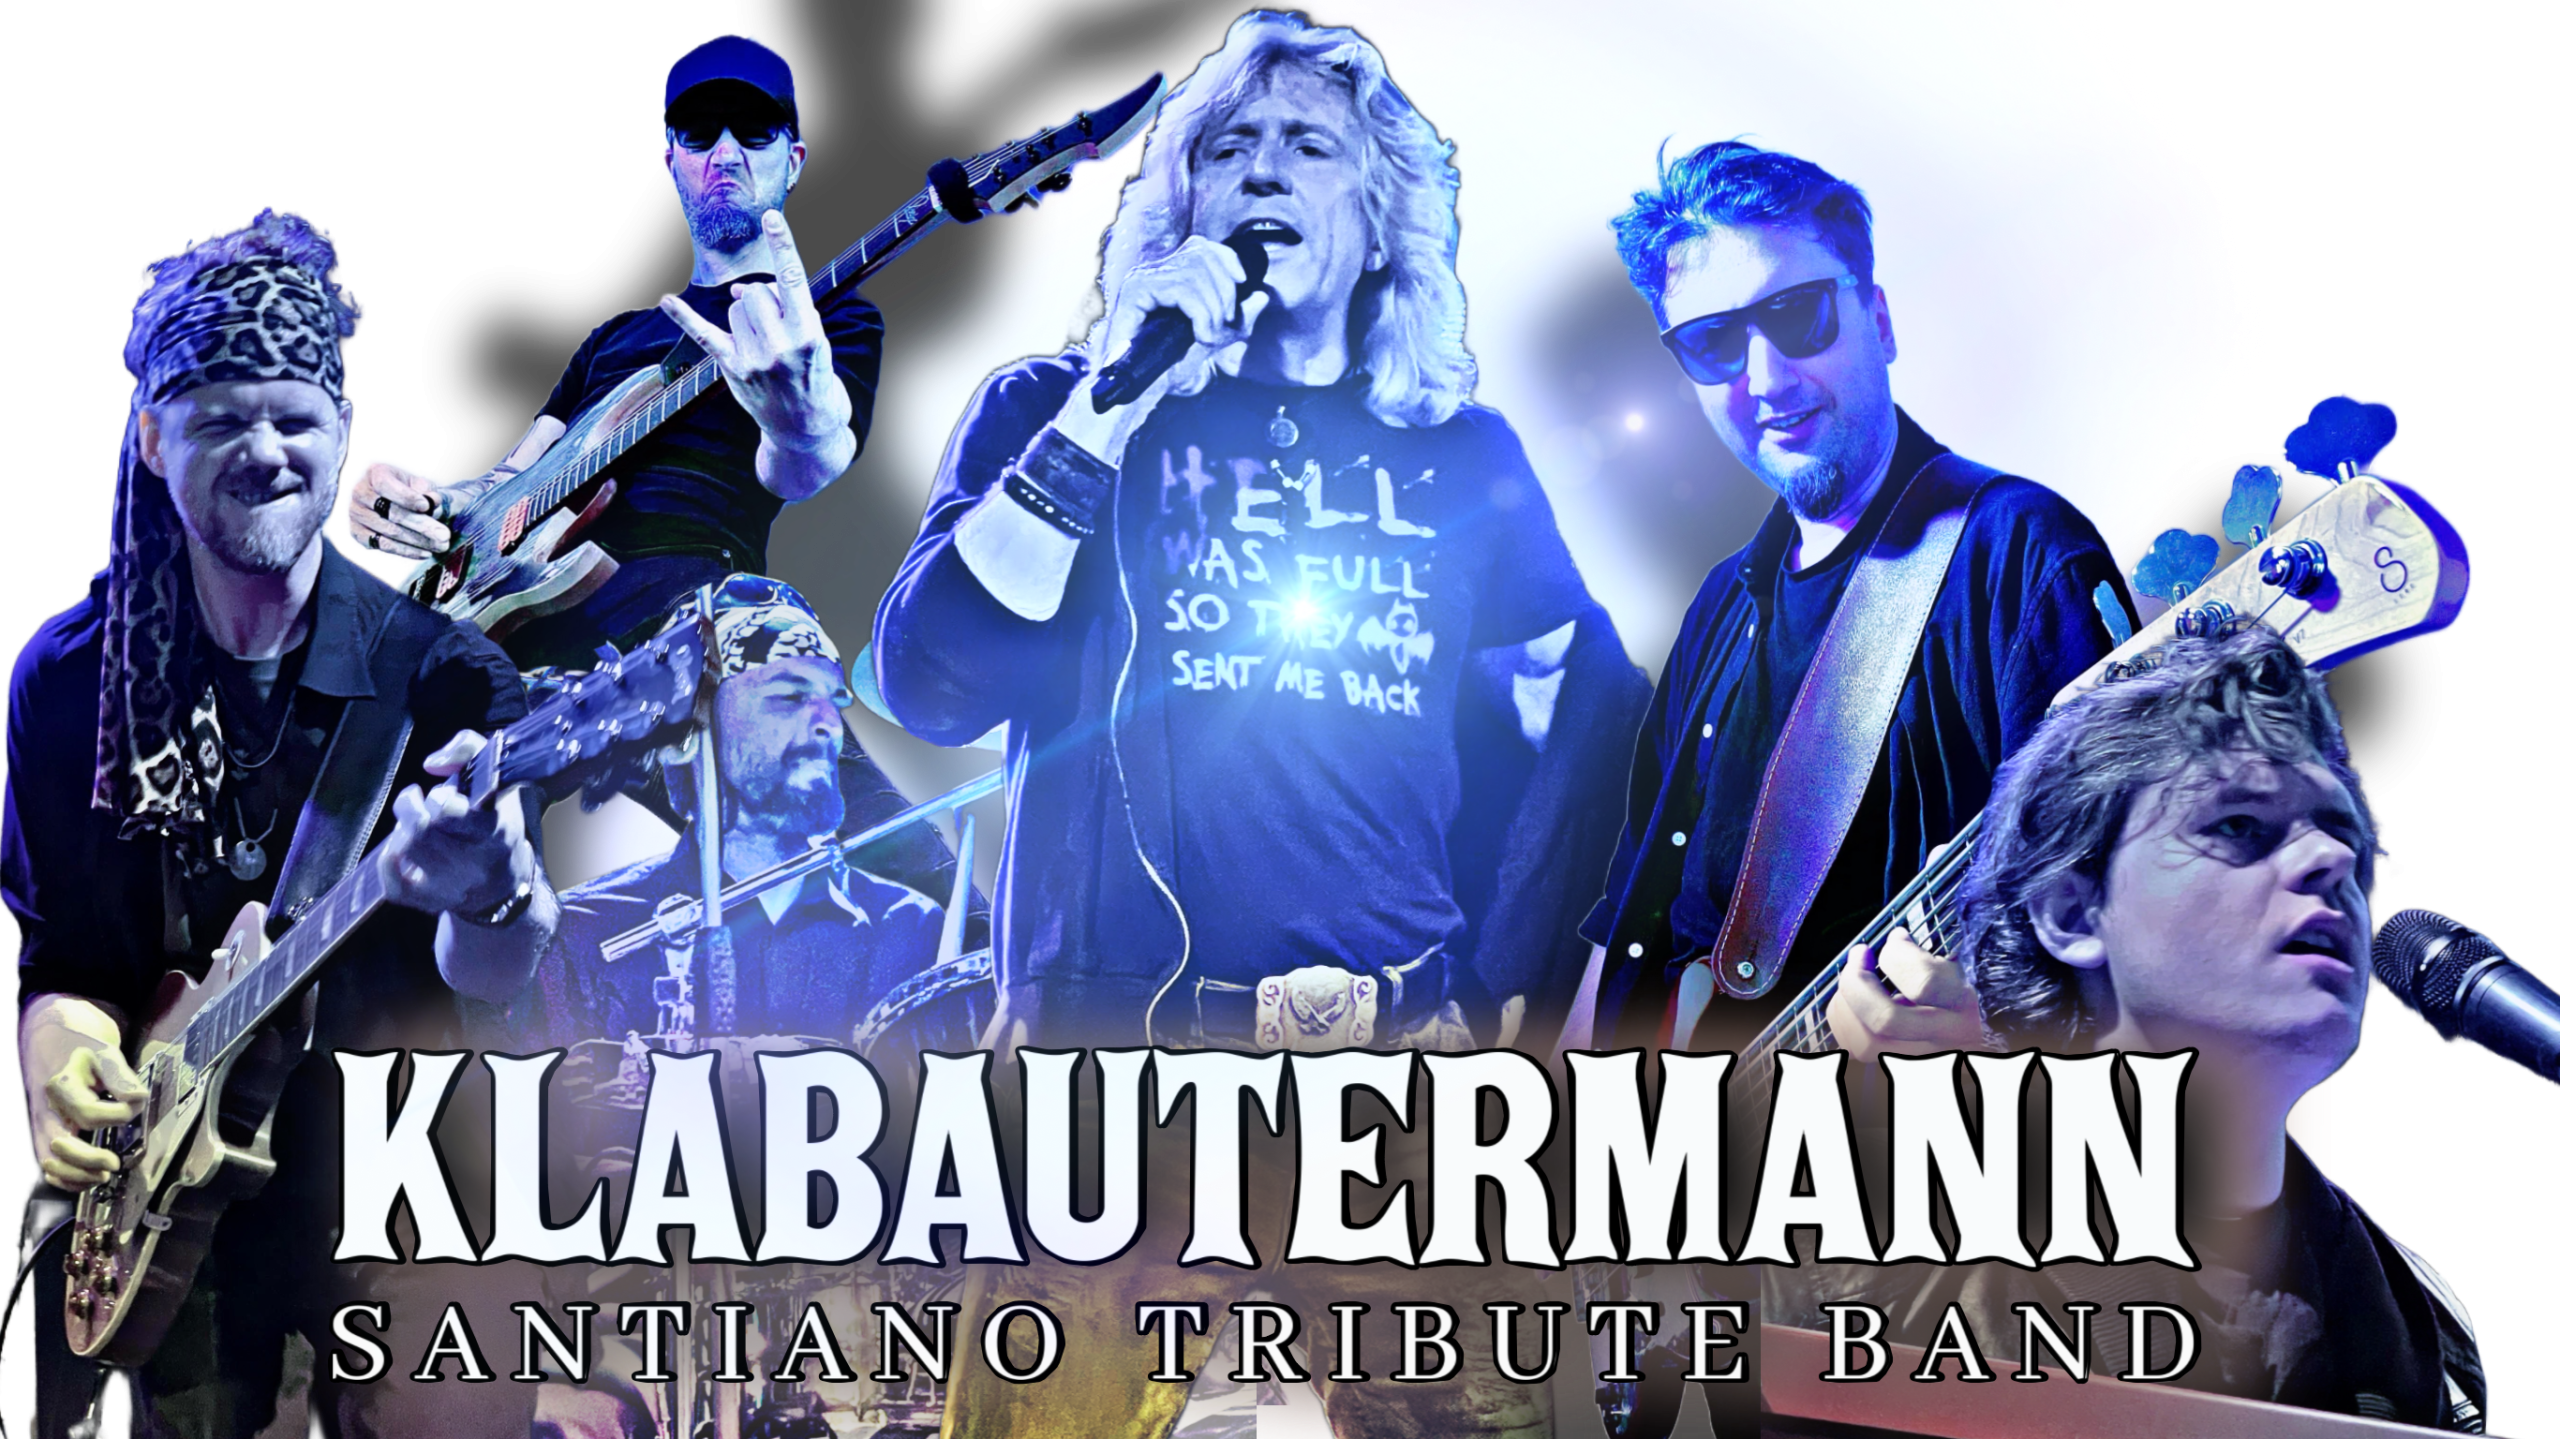 Santiano_meets_the_beatles_The_Tribute_Show_Silver_Beatles_Klabautermann